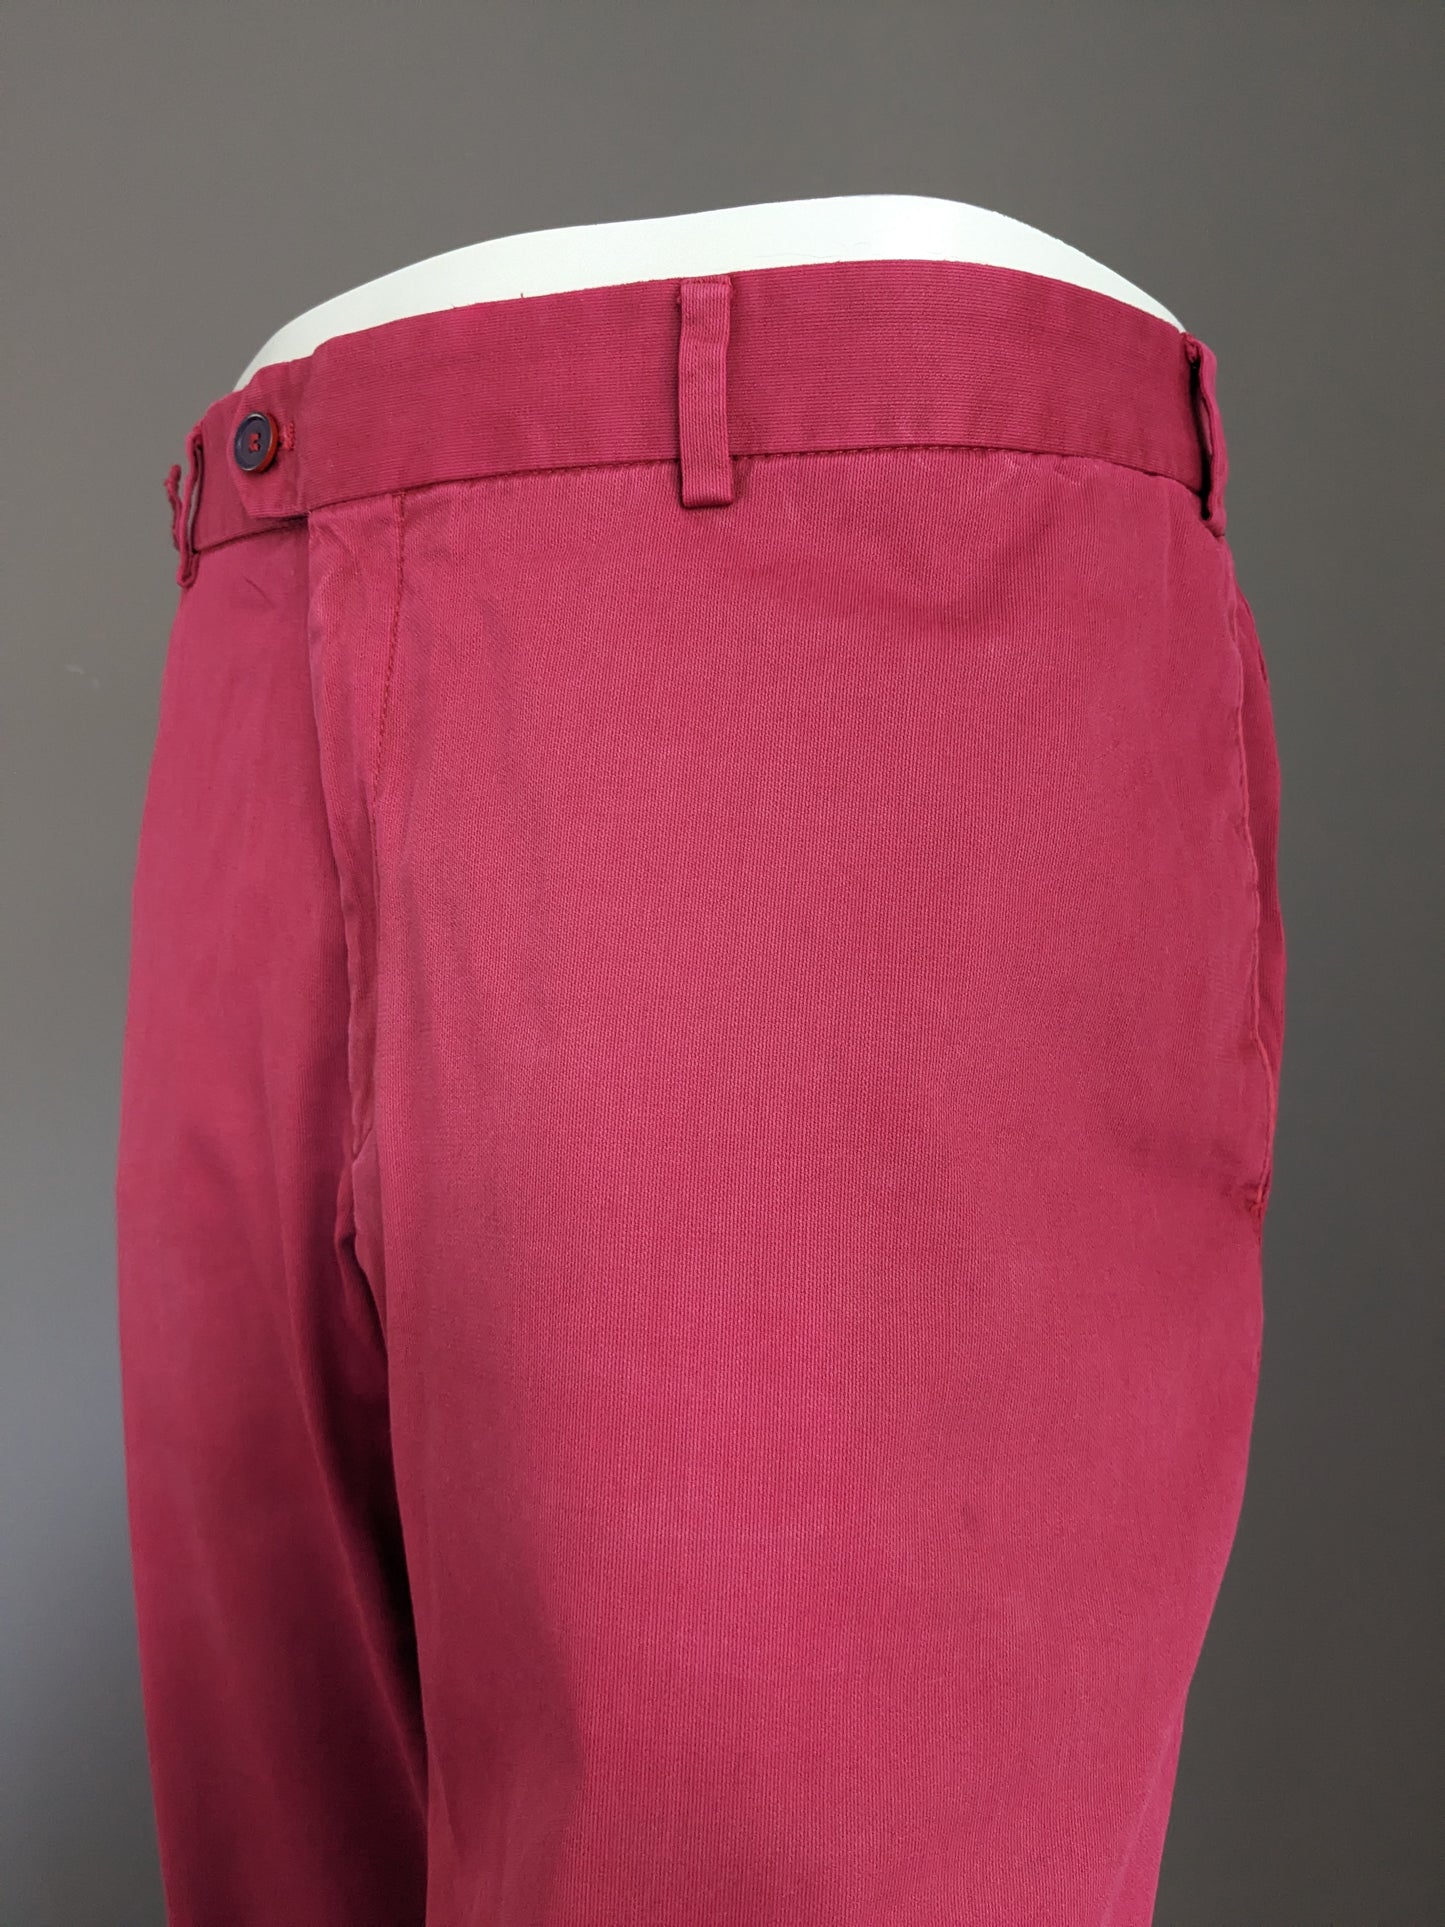 Hiltl broek / pantalon ZE500. Rood gestreept motief. Maat 28 (56 / XL). Contemporary Fit.